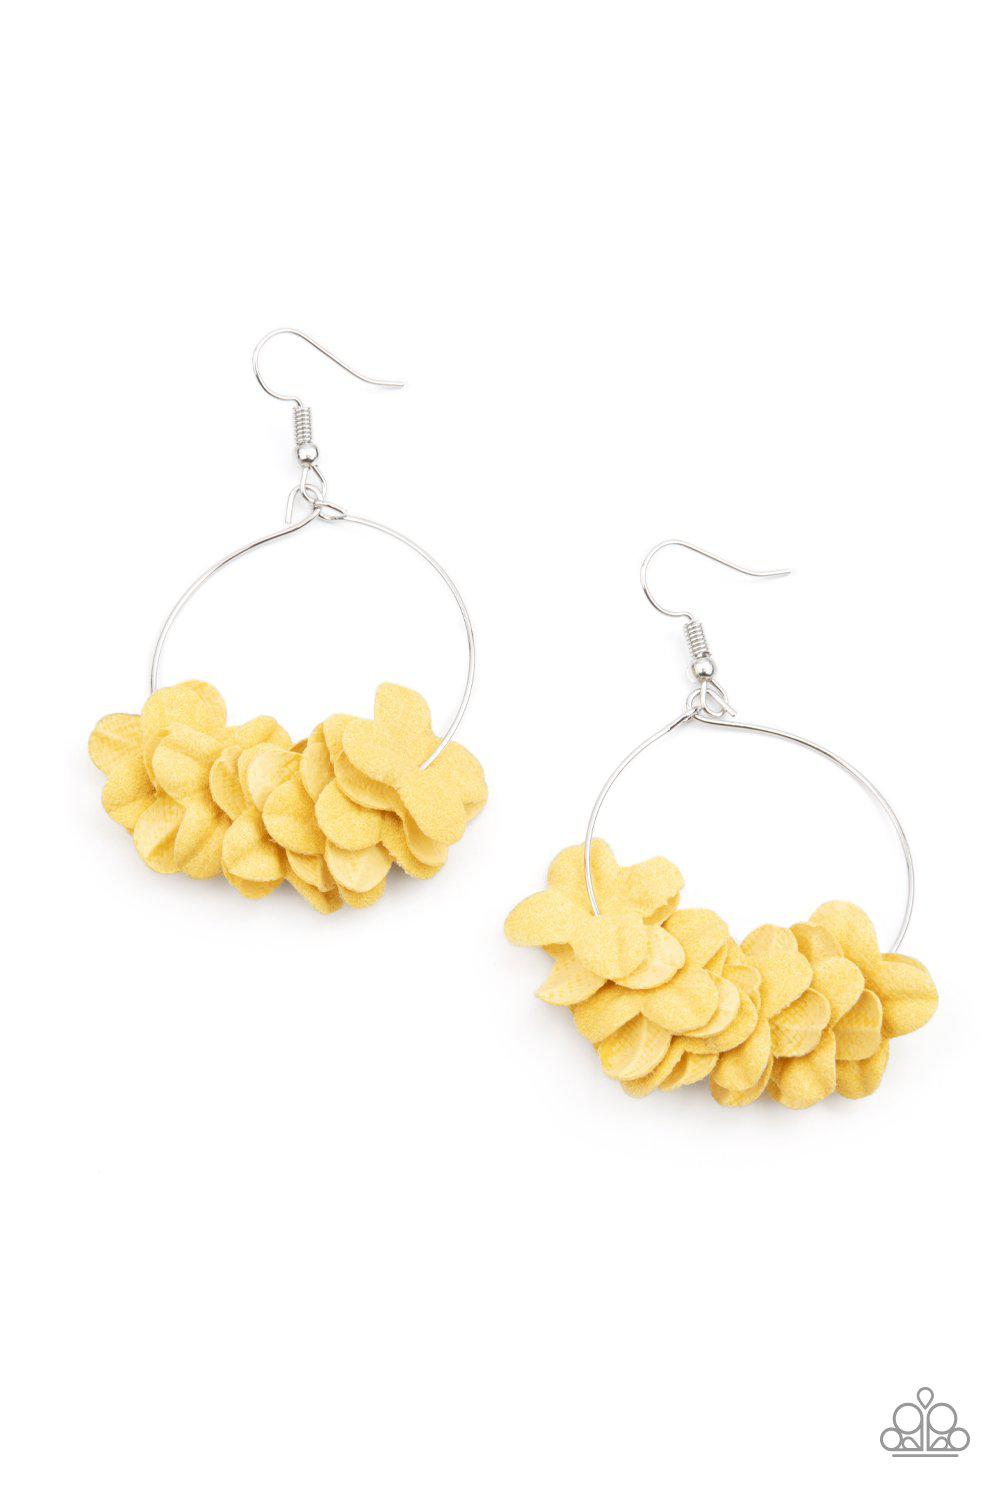 Flirty Florets Yellow Flower Hoop Earrings - Paparazzi Accessories- lightbox - CarasShop.com - $5 Jewelry by Cara Jewels